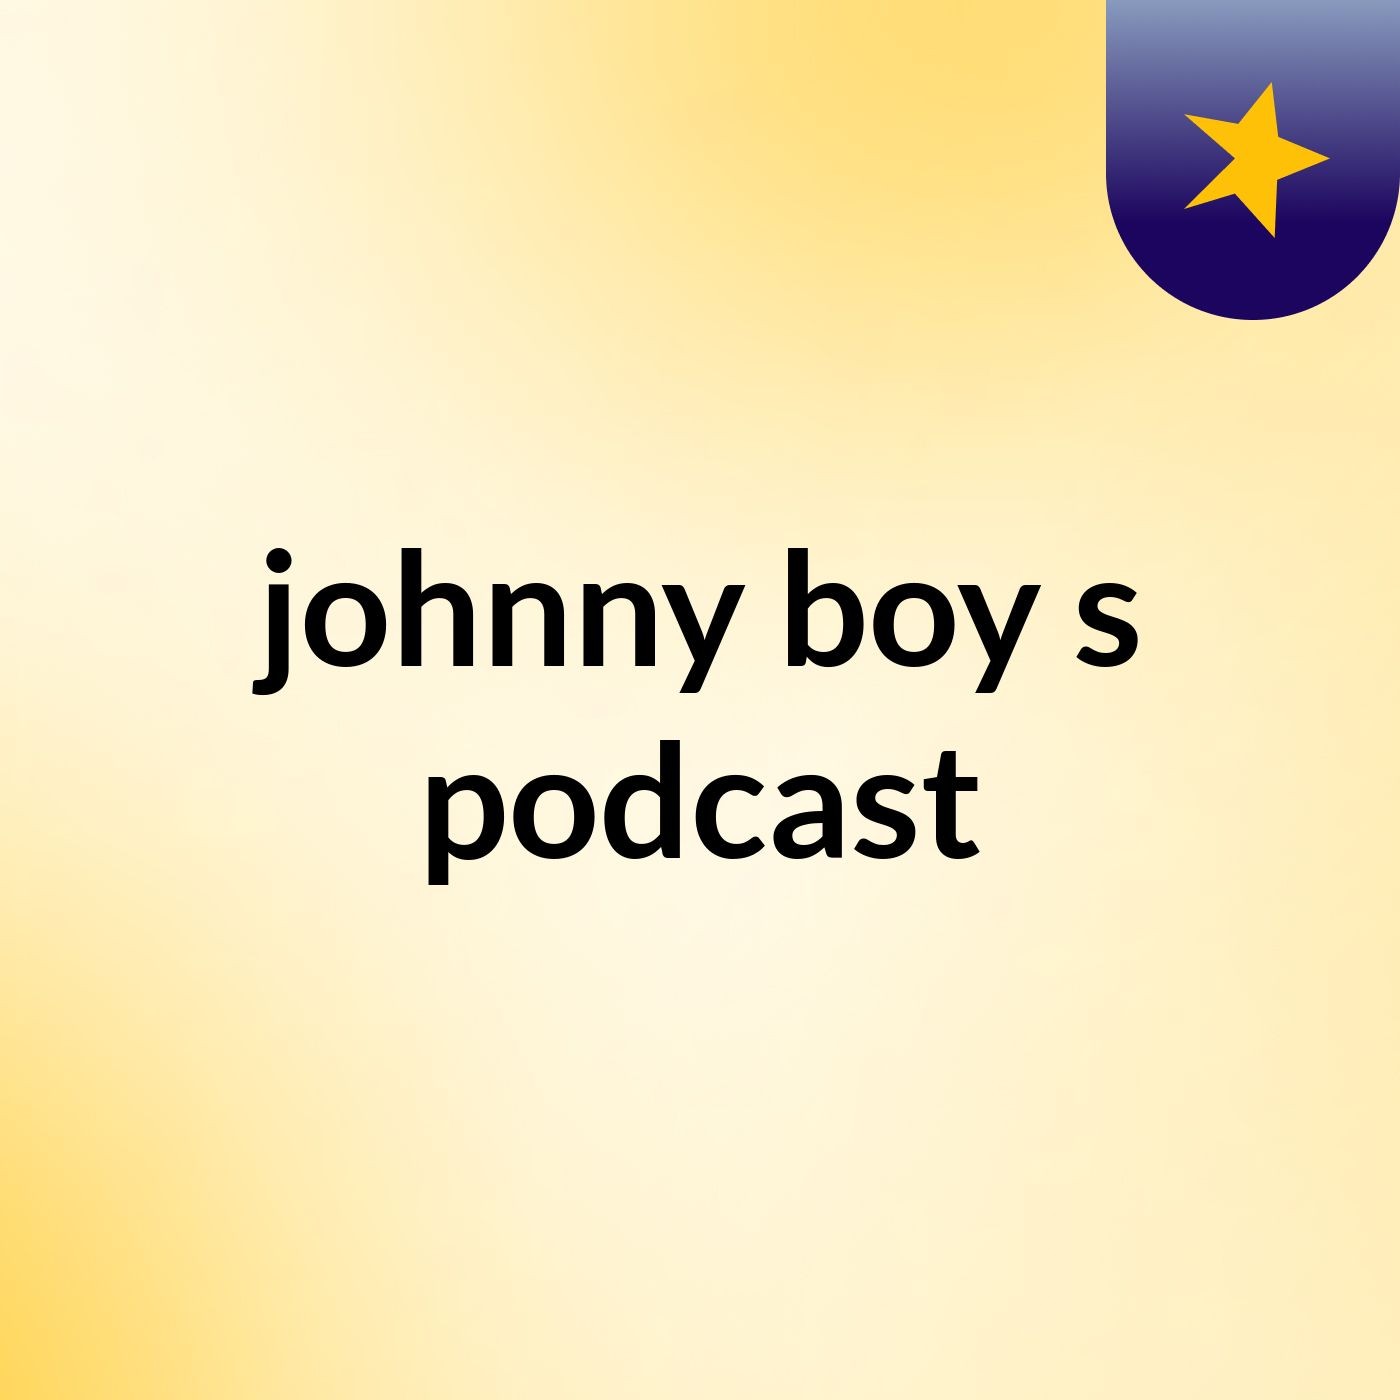 Episode 3 - johnny boy's podcast